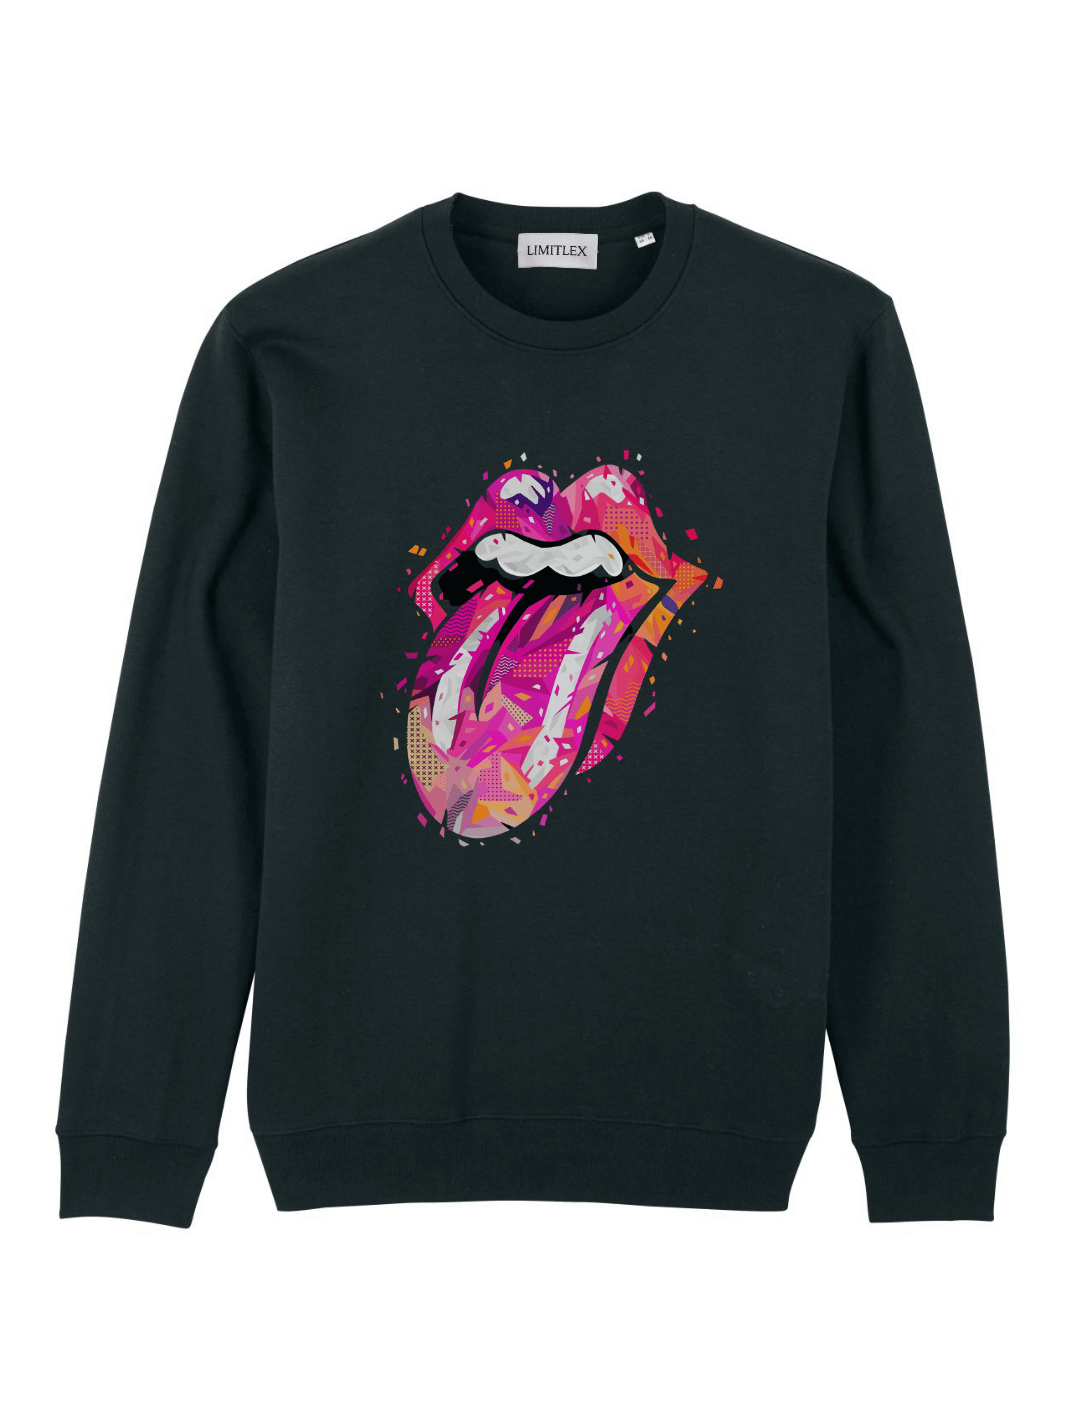 Rock sweatshirt